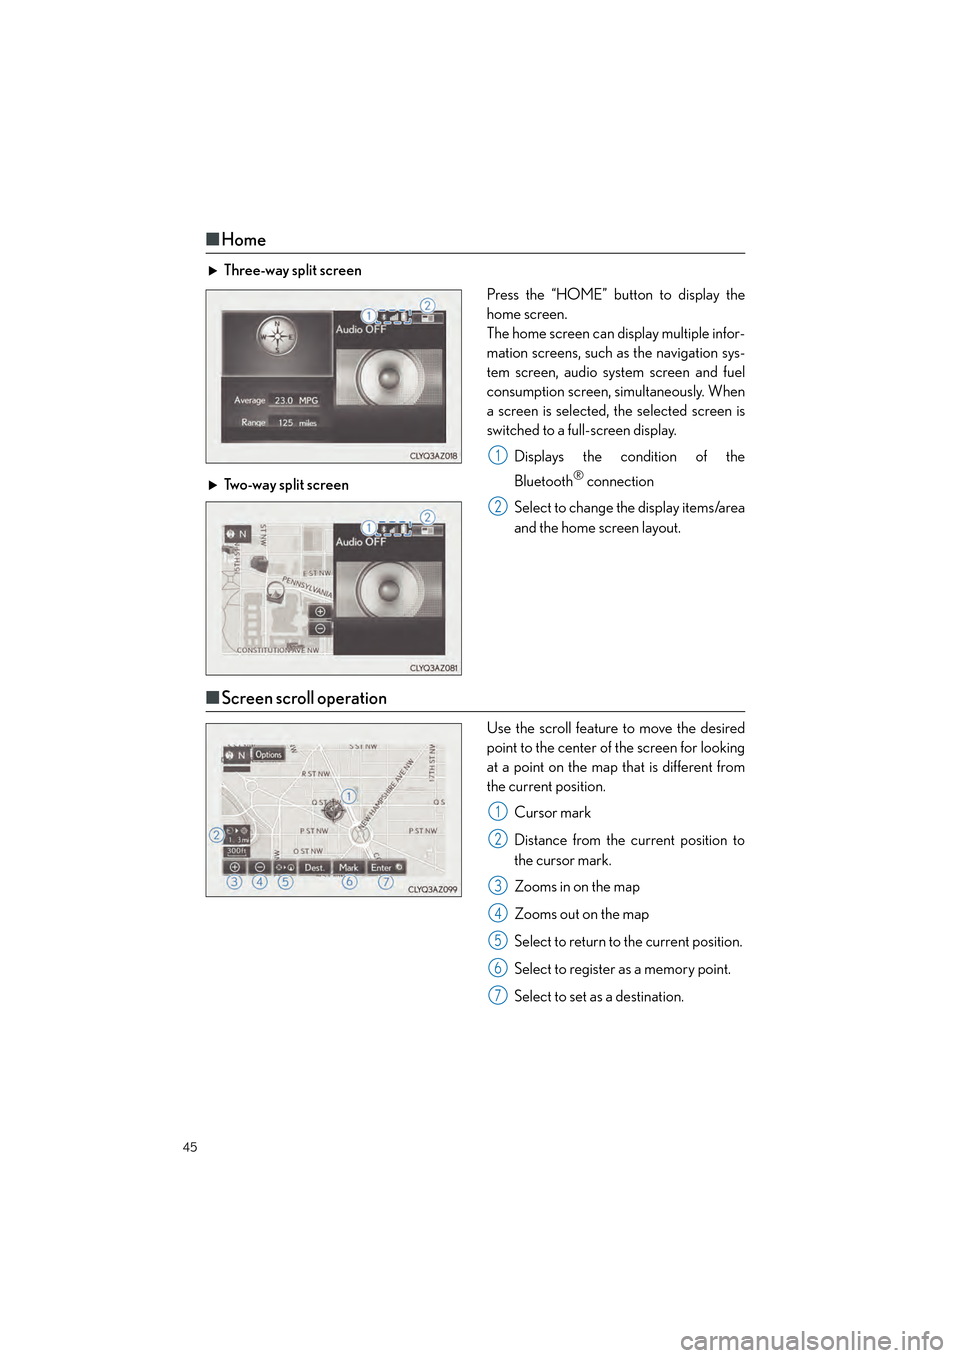 Lexus GX460 2017  Quick Guide 45
GX460_QG_OM60P00U_(U)
■Home
Three-way split screen
Press the “HOME” button to display the
home screen.
The home screen can display multiple infor-
mation screens, such as the navigation sys-
